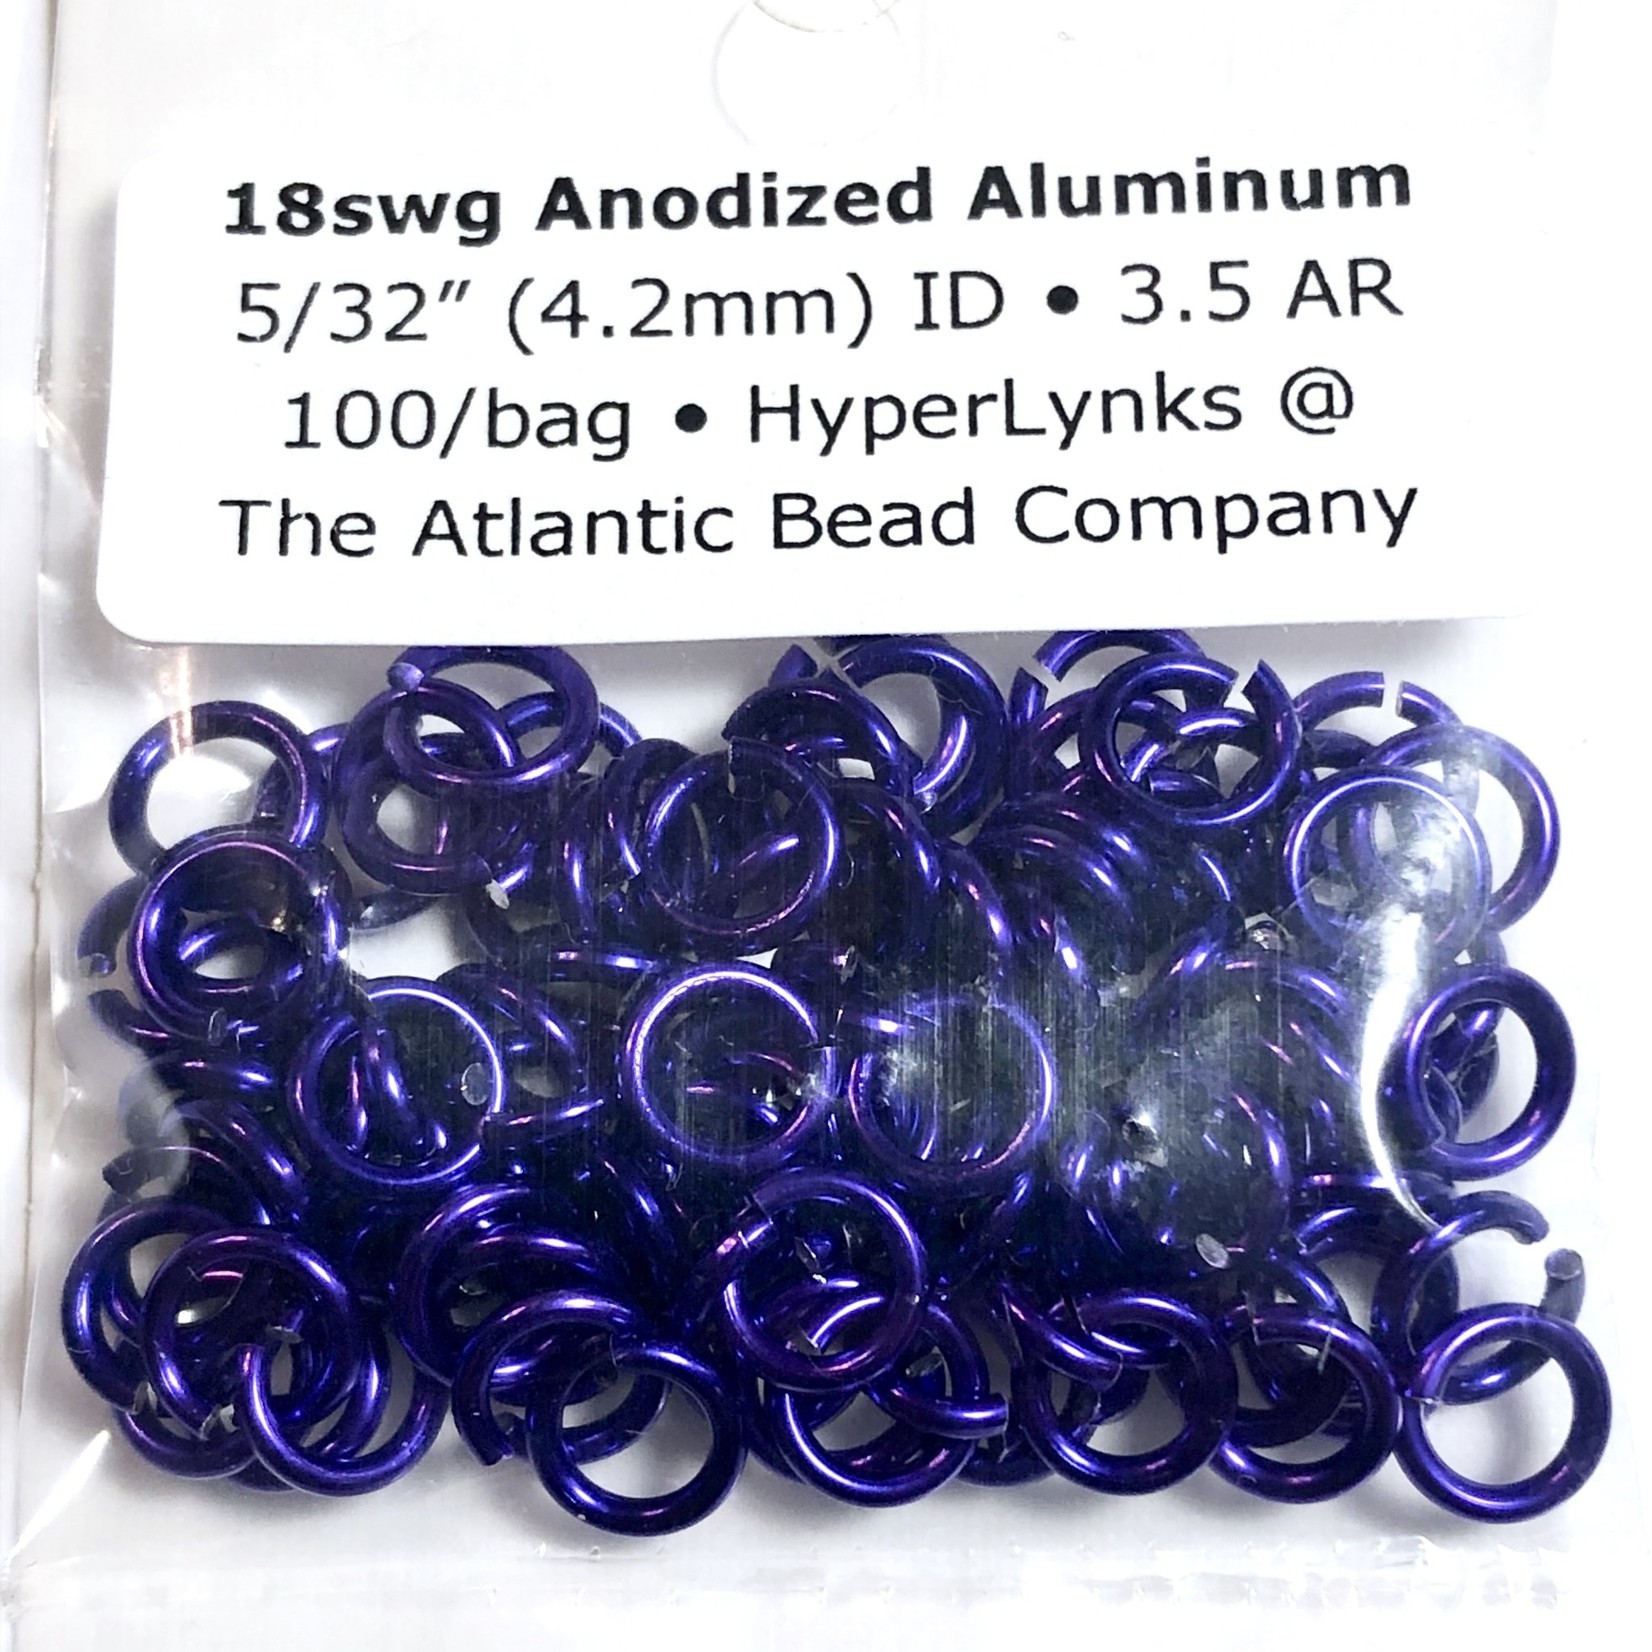 Anodized Aluminum Rings 18ga 5/32" Violet 100pcs